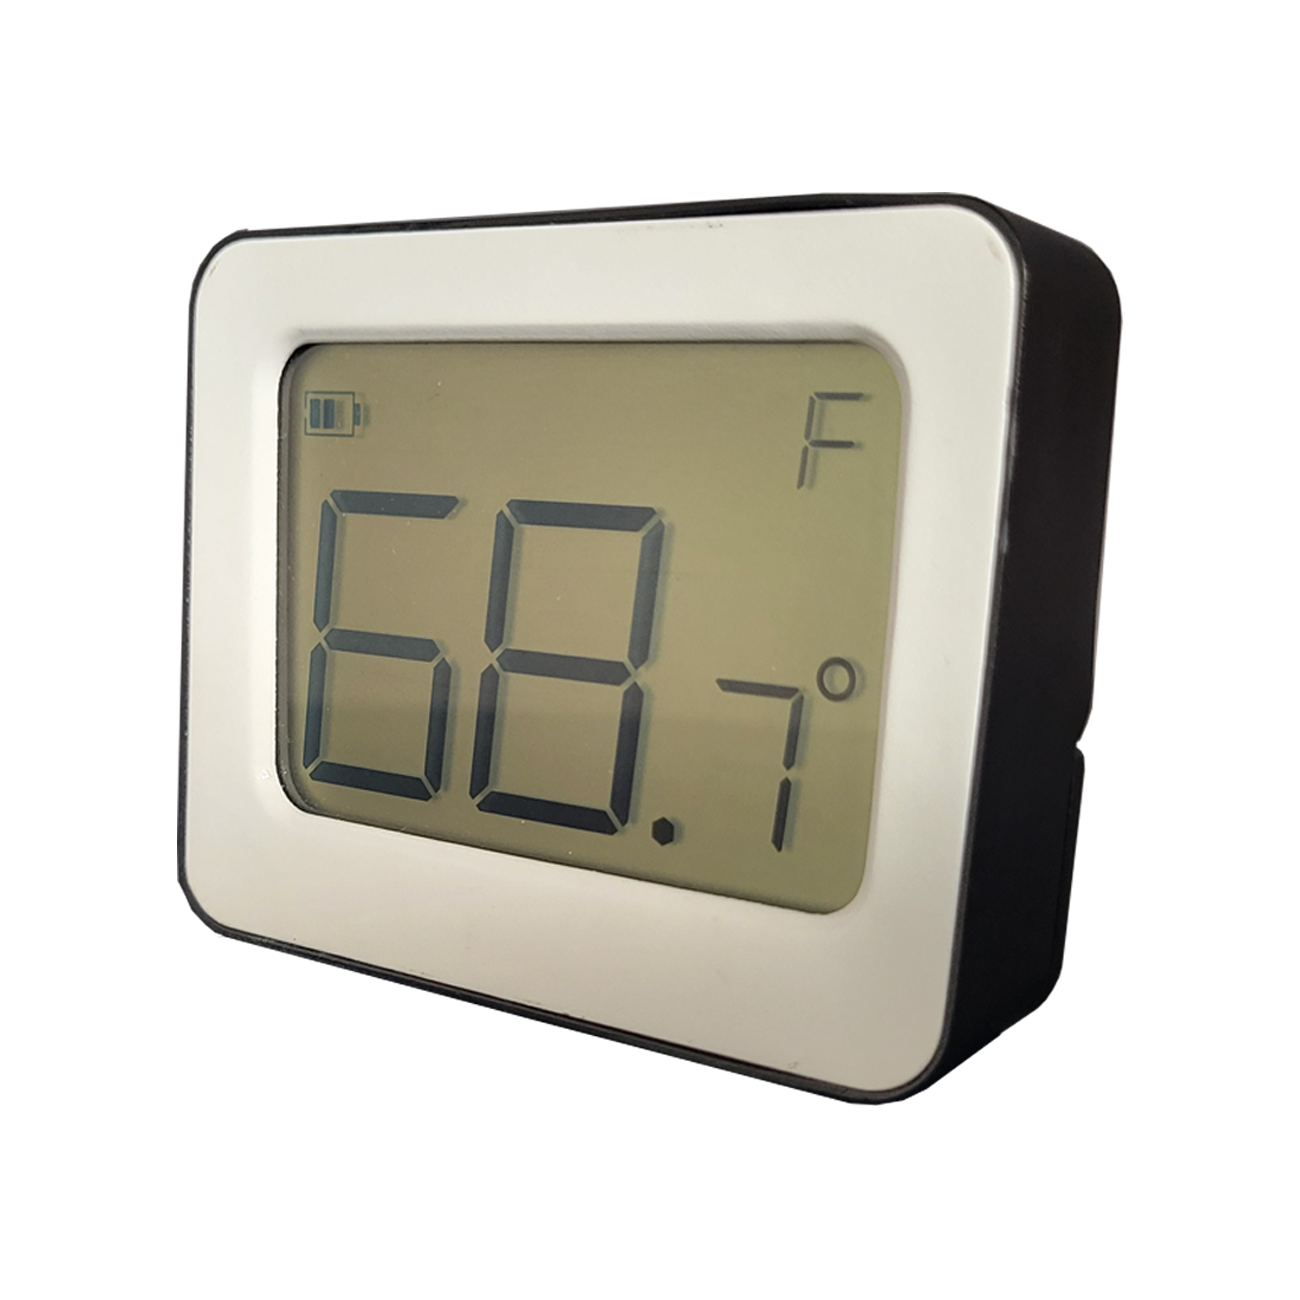 External Thermostat Pairing